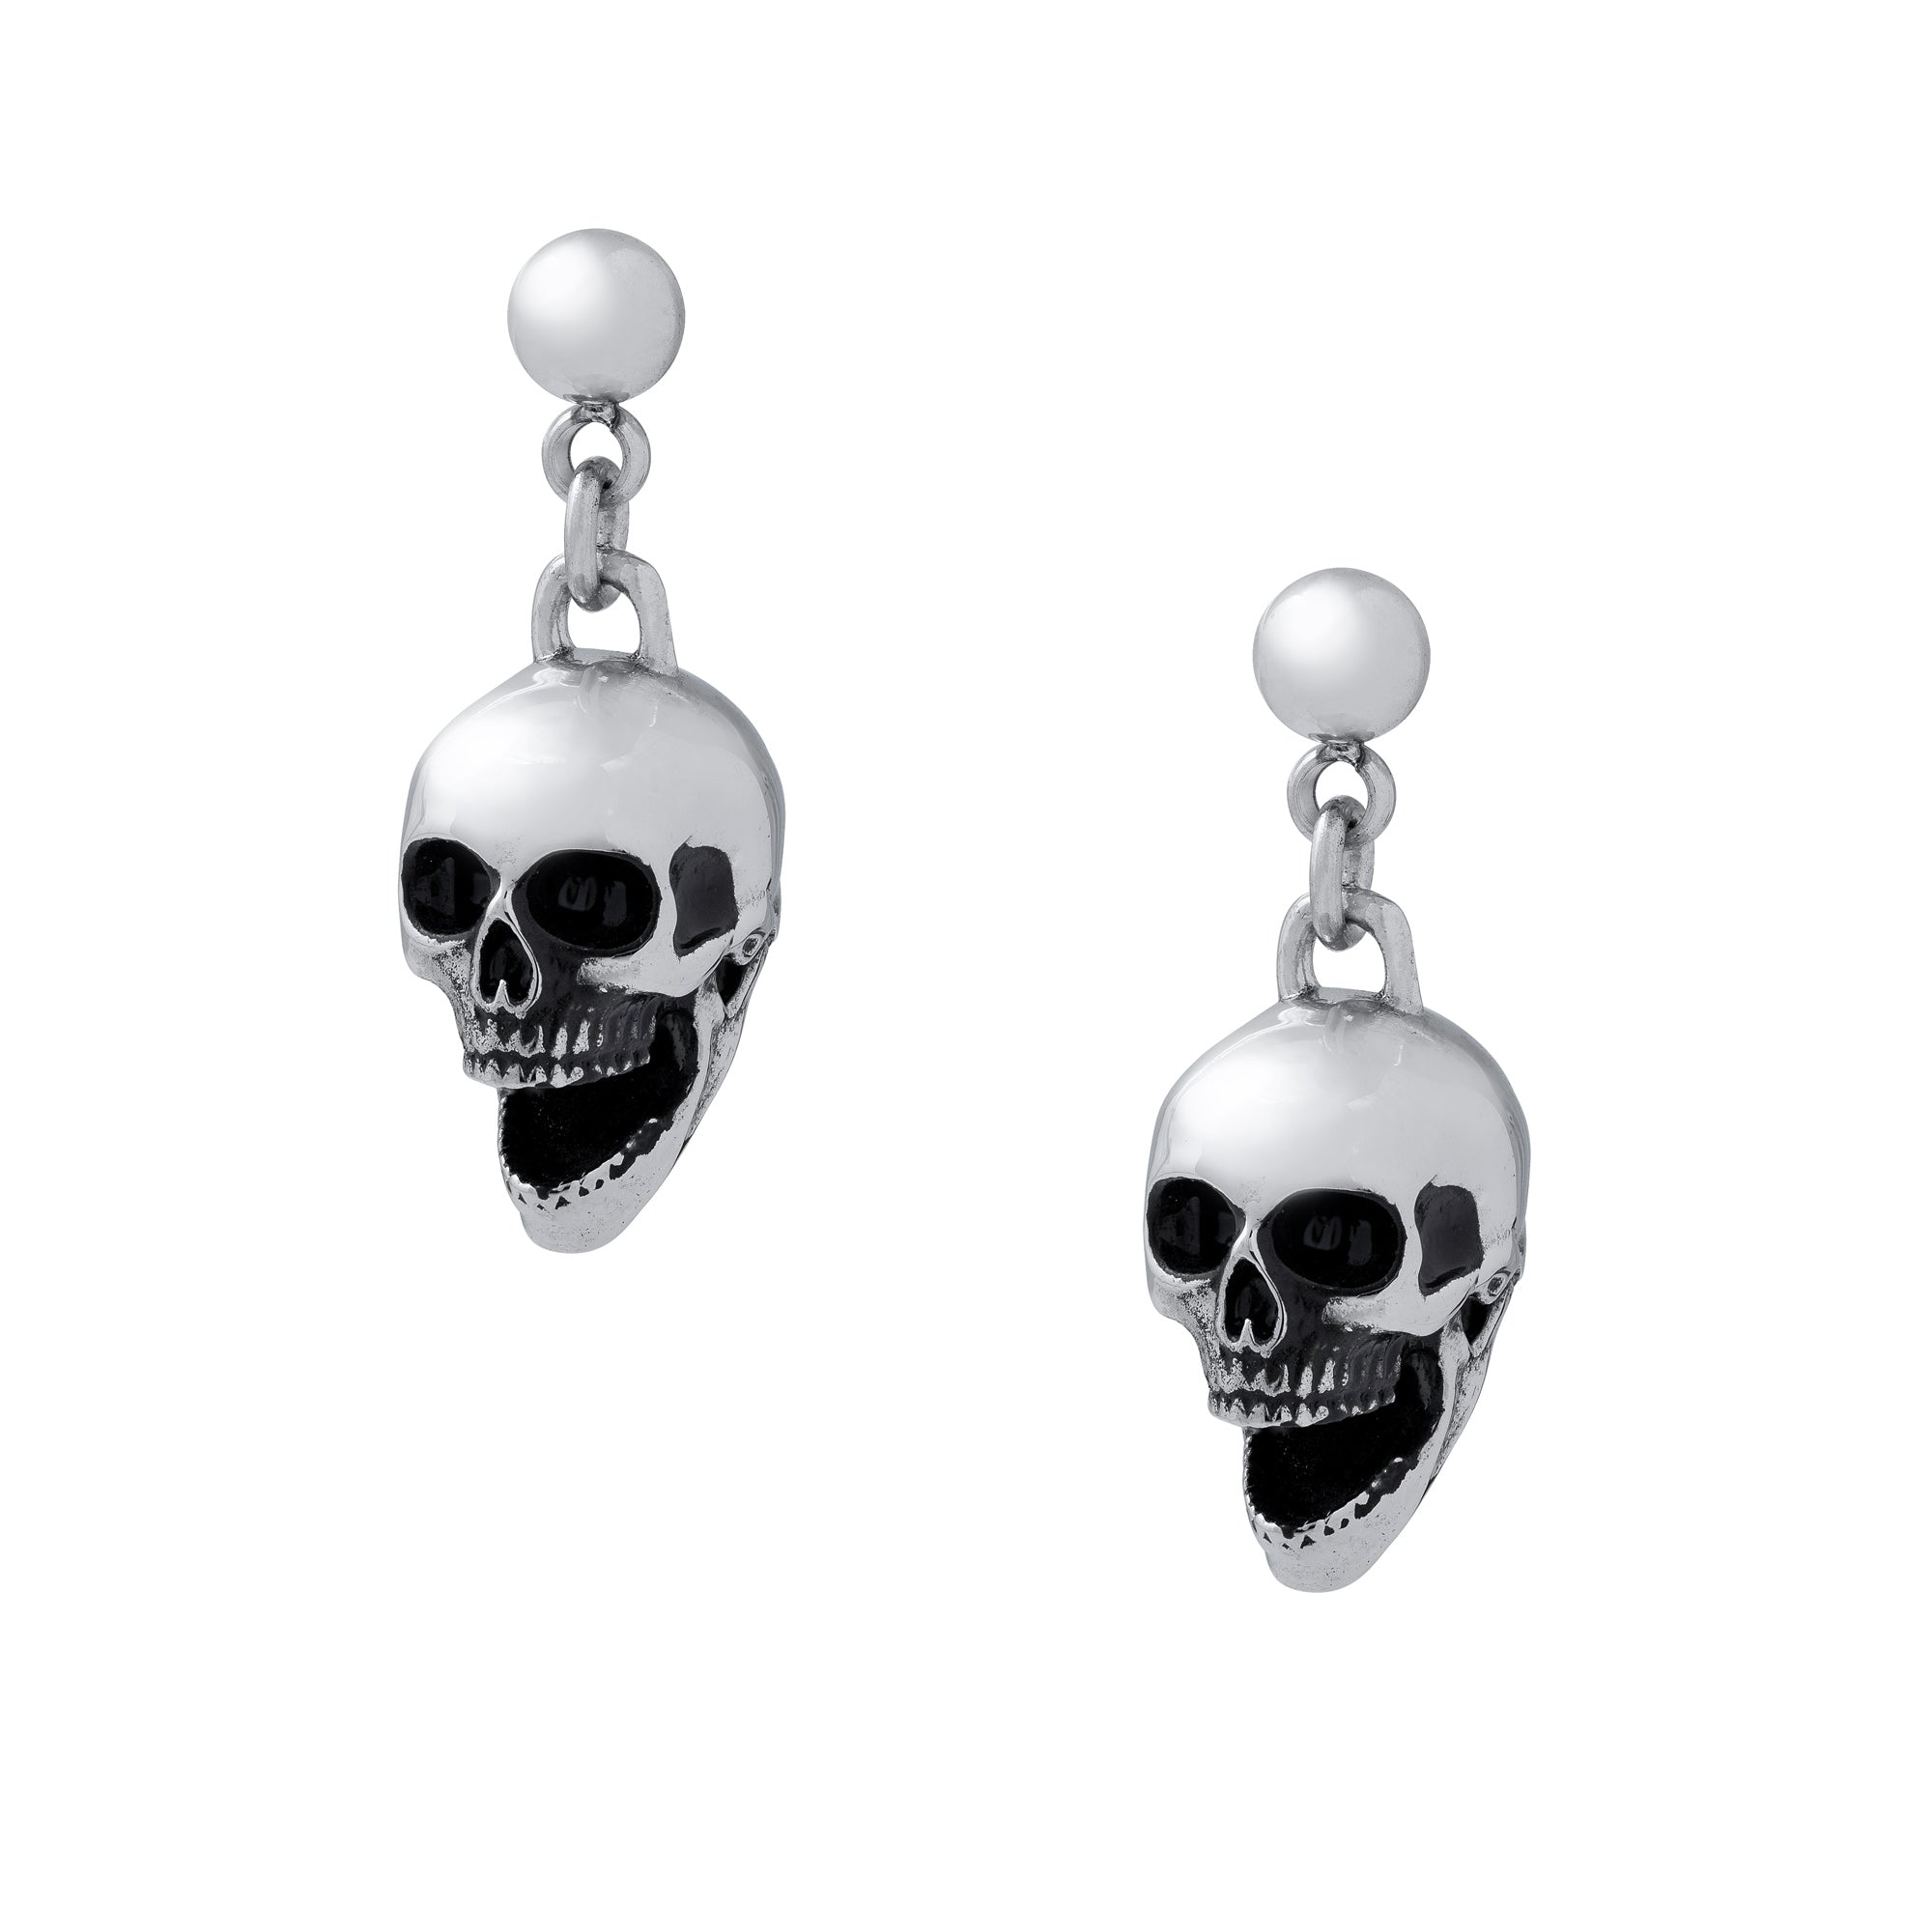 Pirate skull silver stud earrings